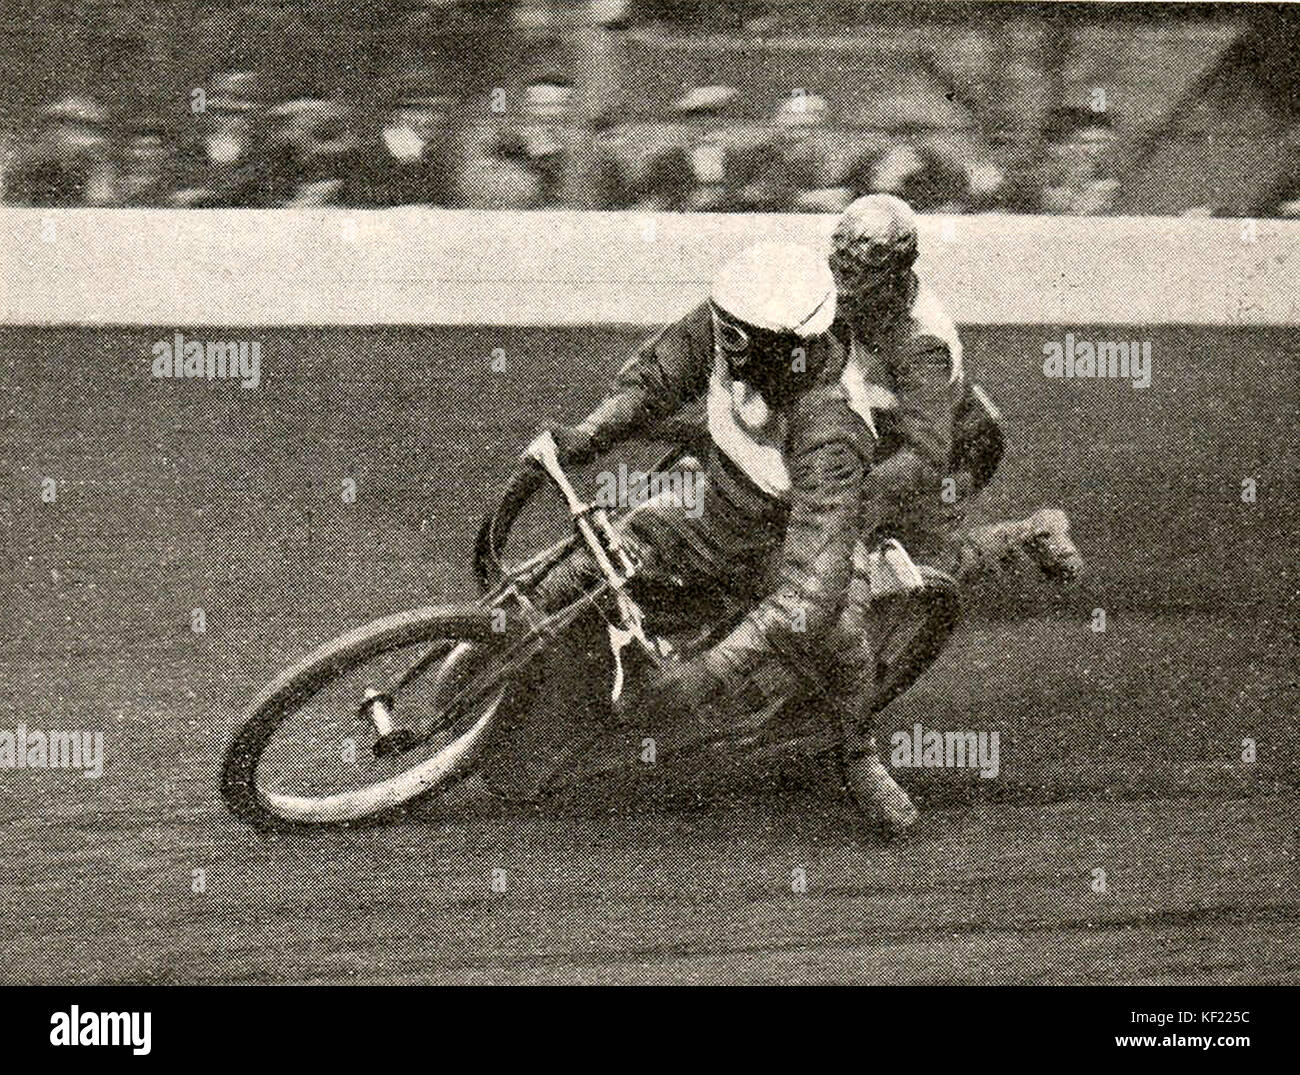 1932 - Moto dirt track racing en Angleterre Banque D'Images